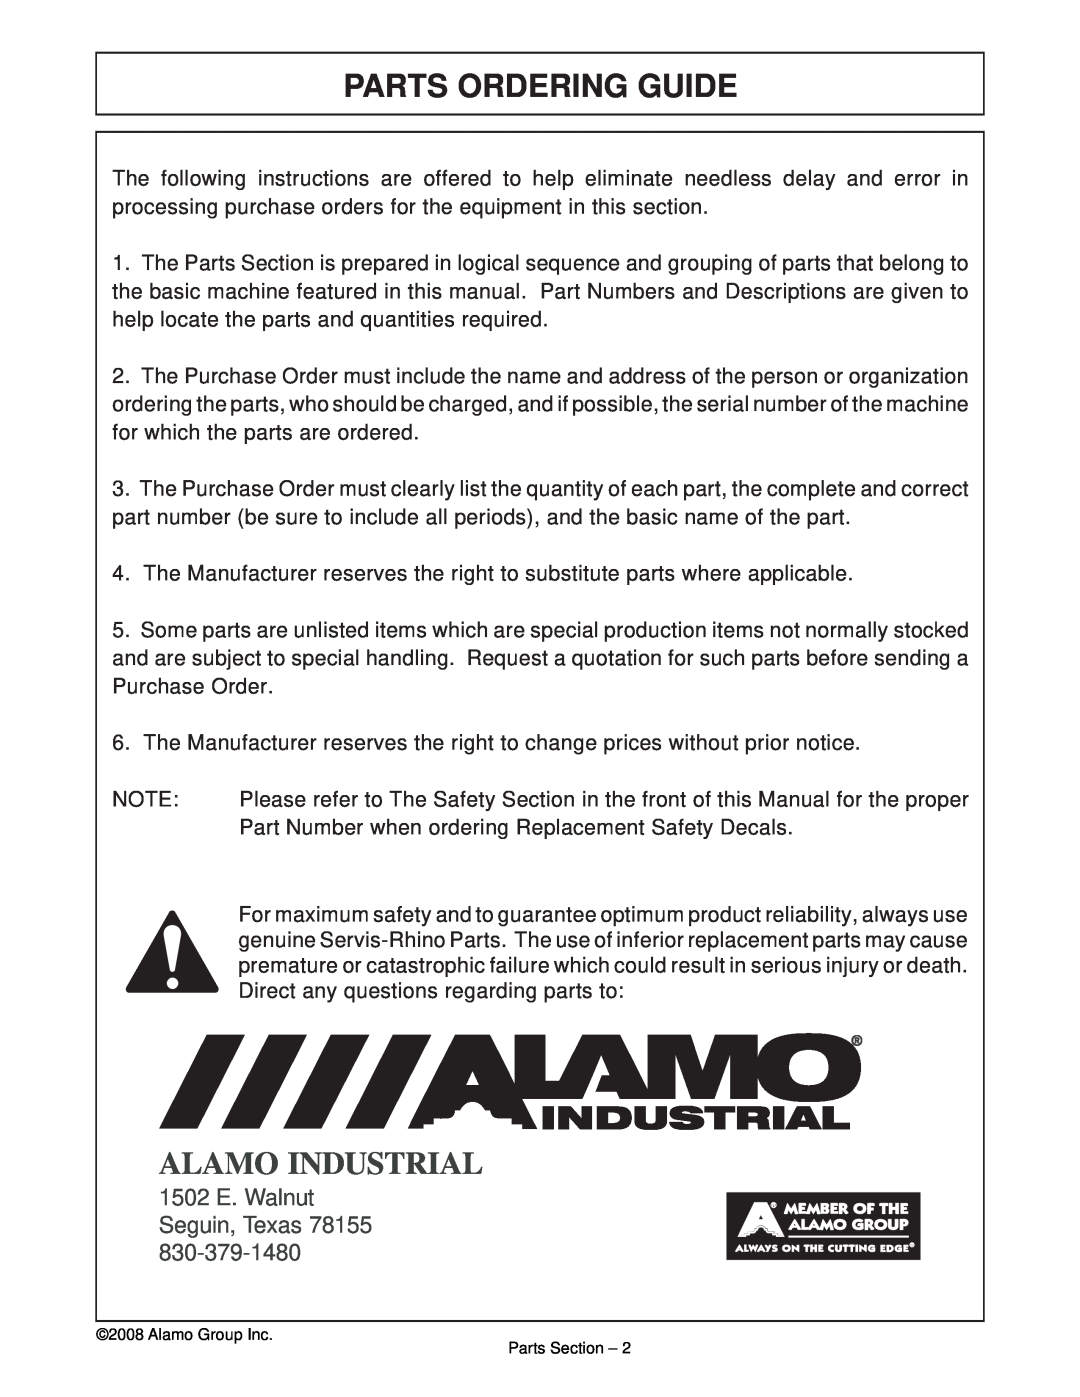 Alamo FC-P-0002 manual Parts Ordering Guide, Alamo Industrial, 1502 E. Walnut Seguin, Texas 78155 